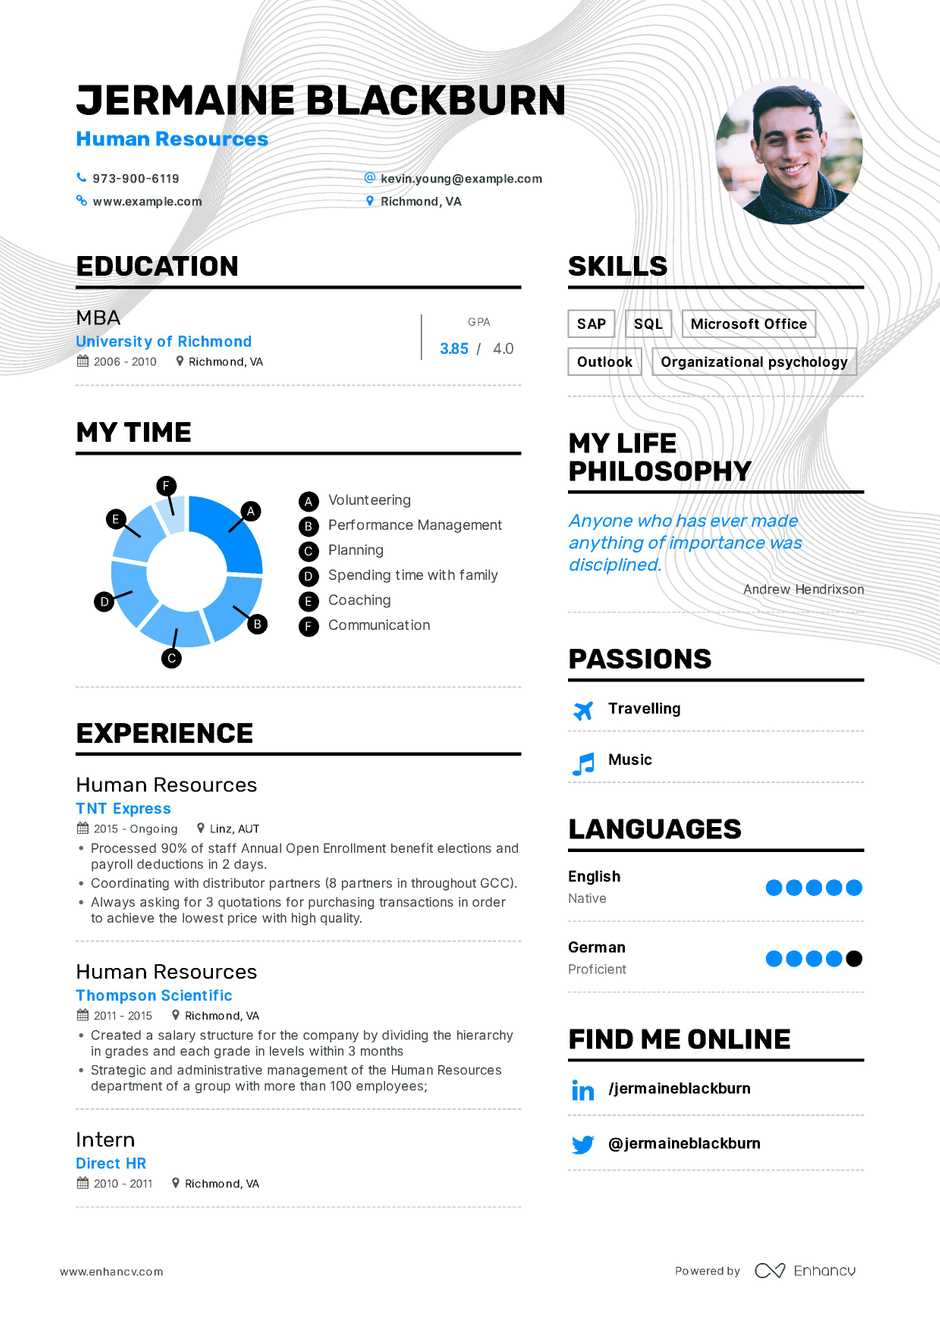 Human Resources Resume Generated Human Resources Resume human resources resume|wikiresume.com